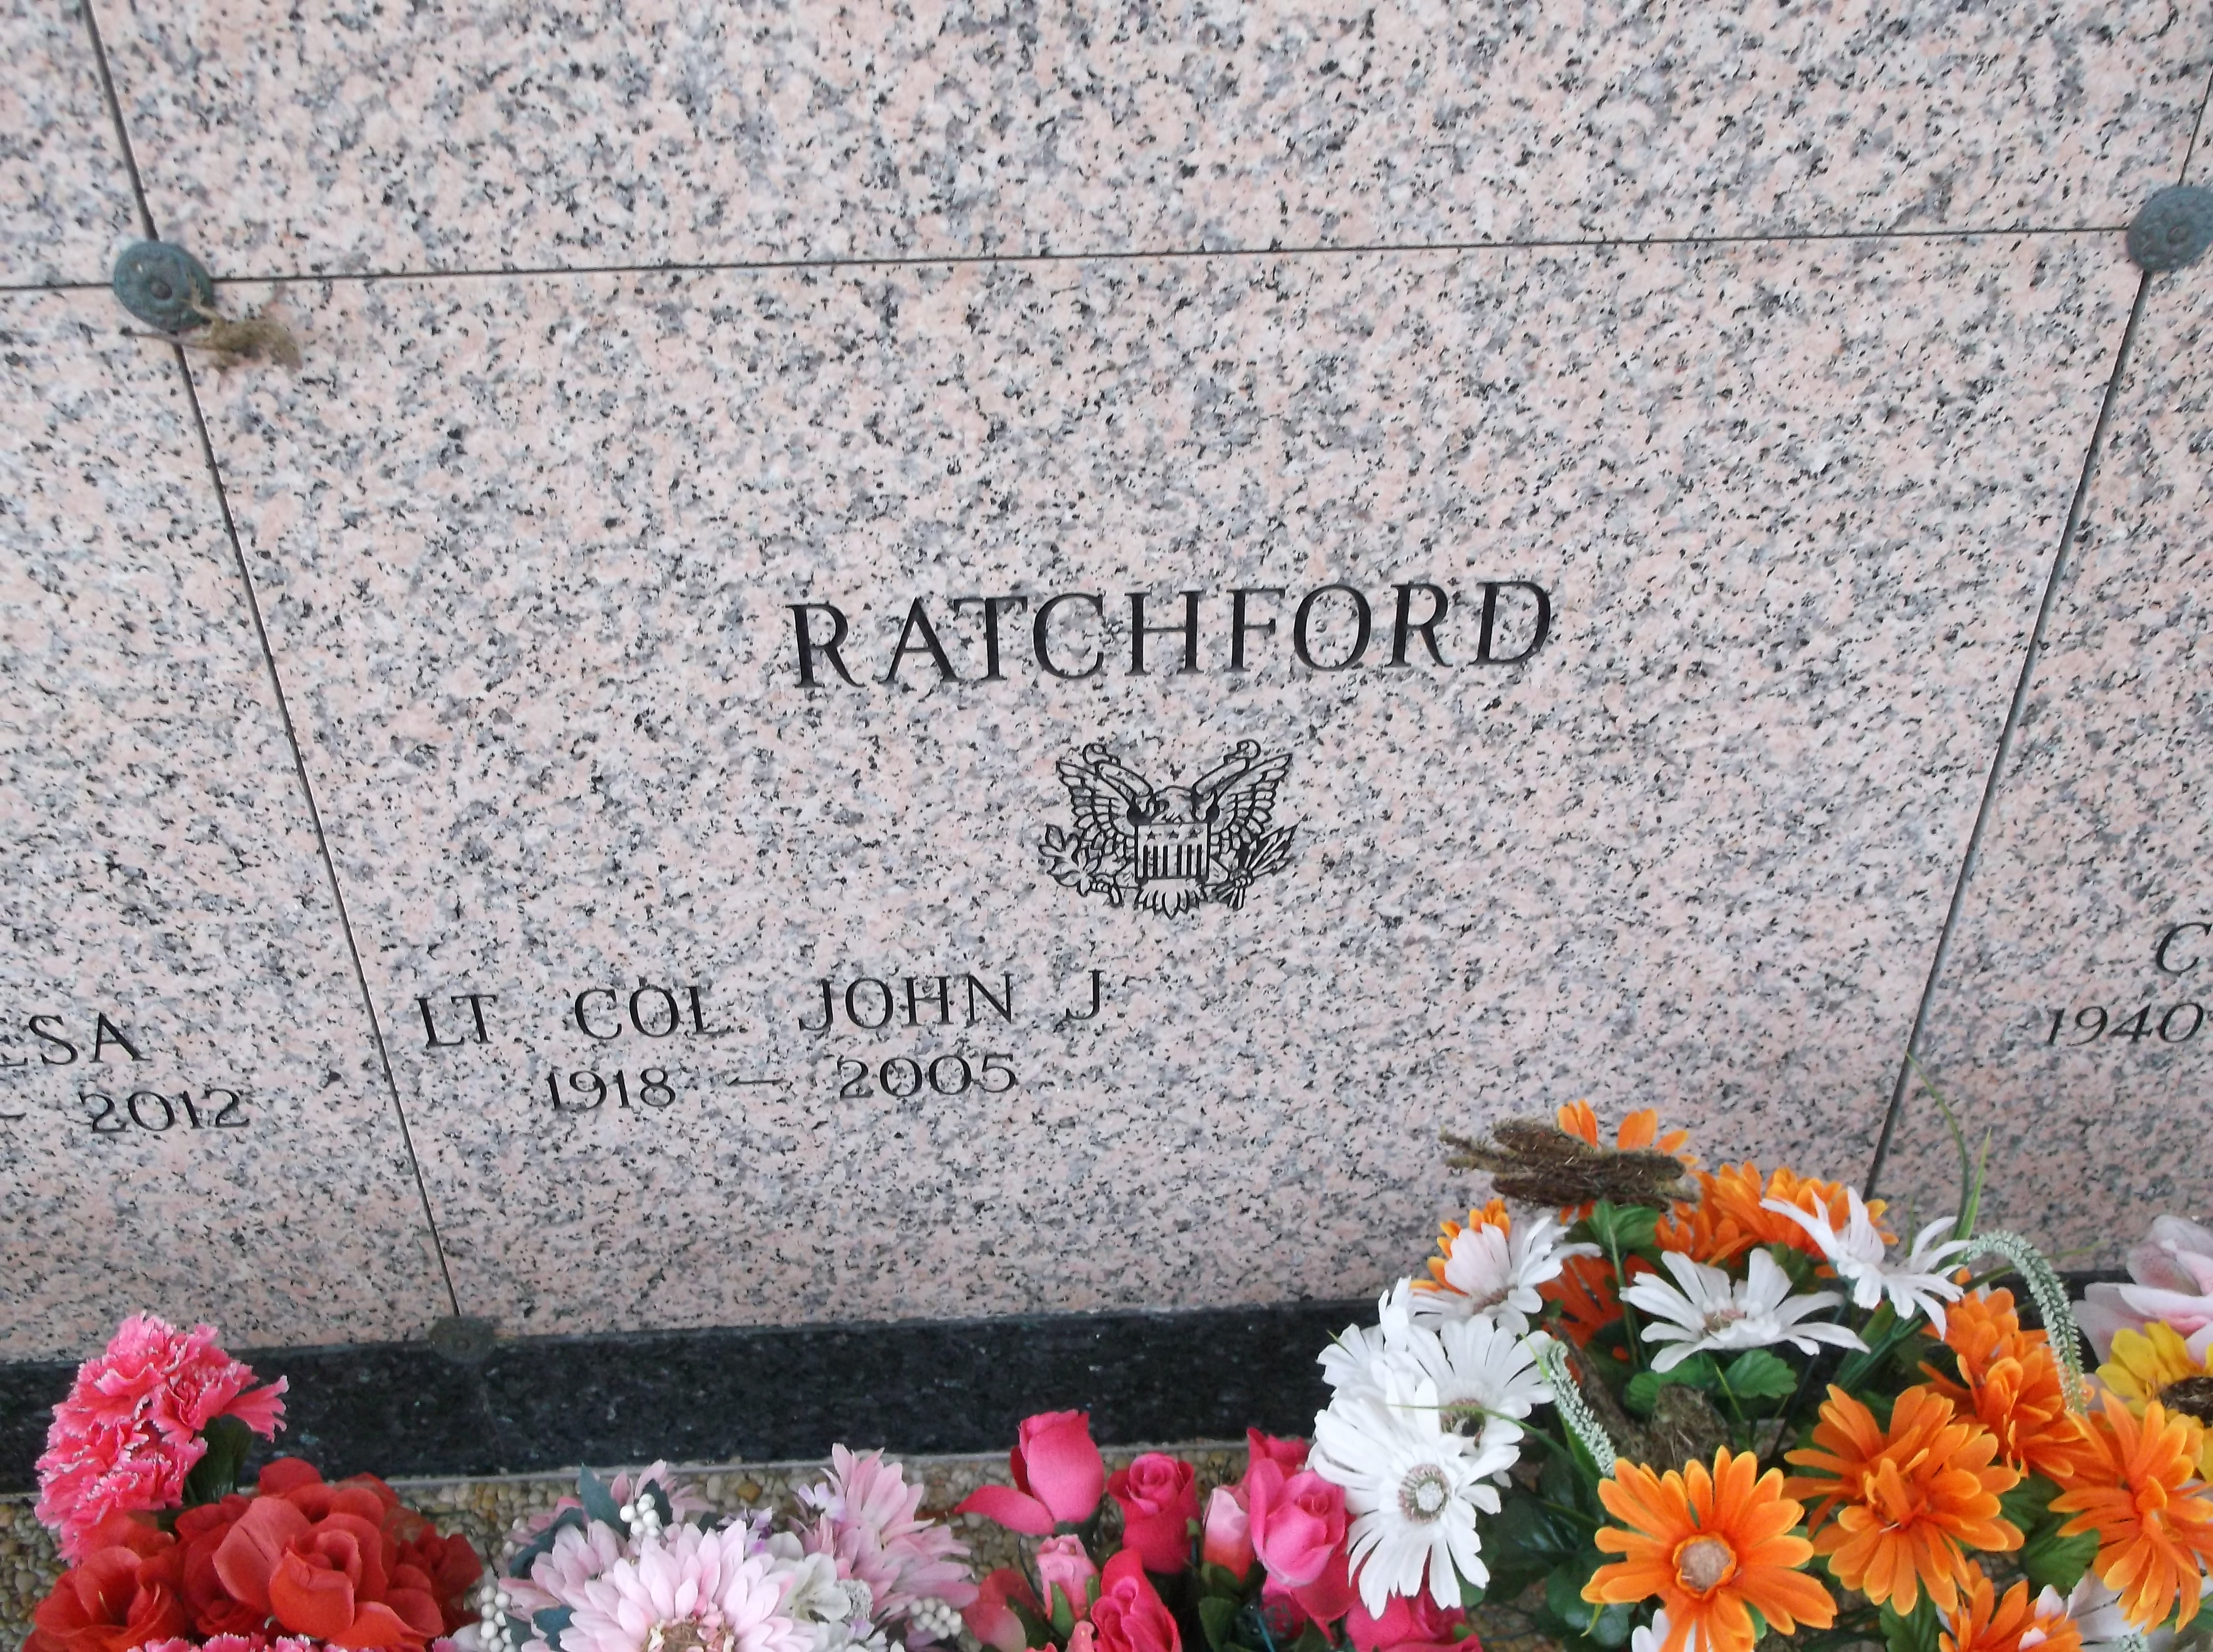 LTC John J Ratchford